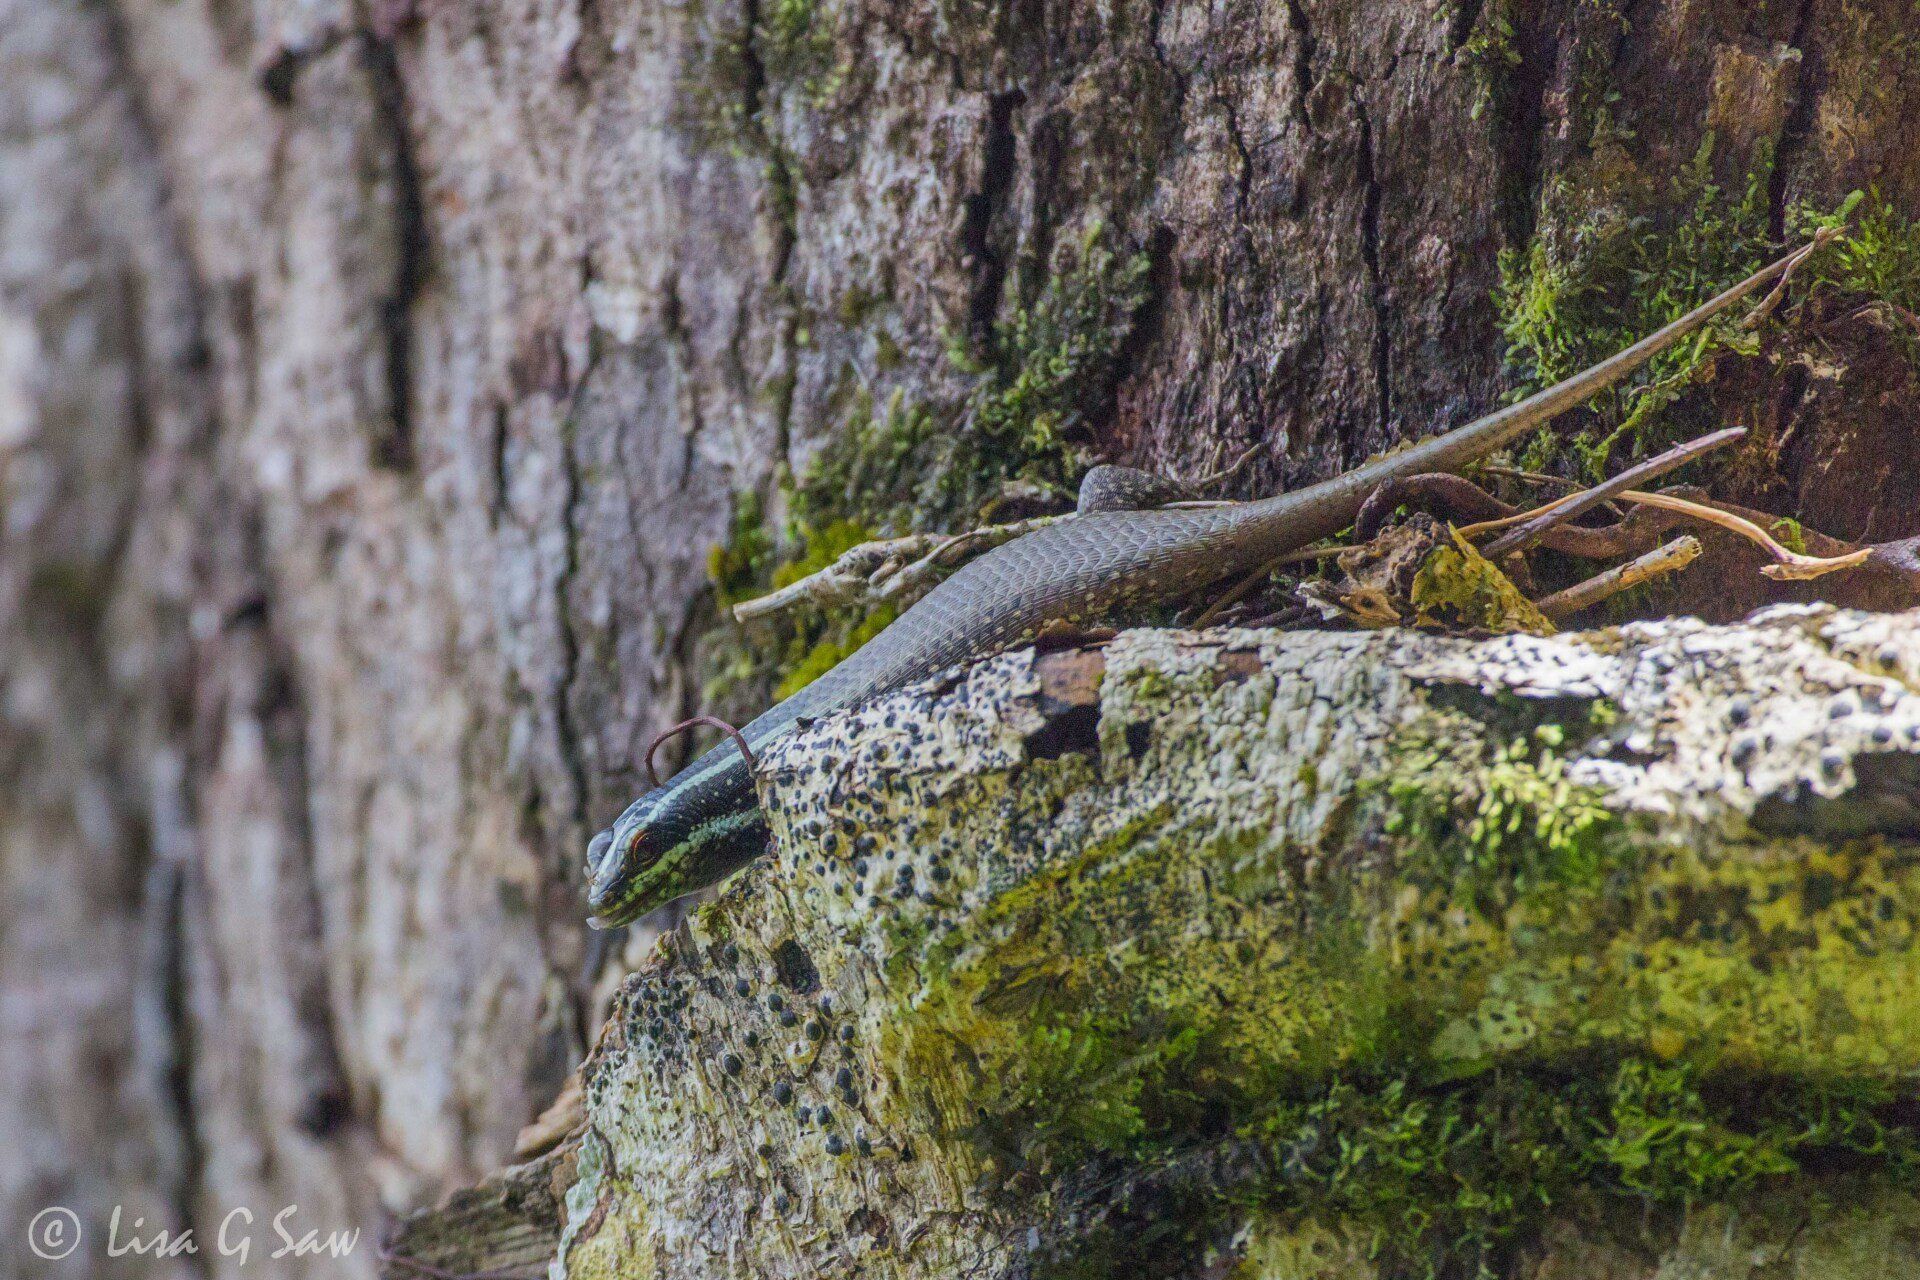 Borneo Tree Skink lizard on tree, Danum Valley